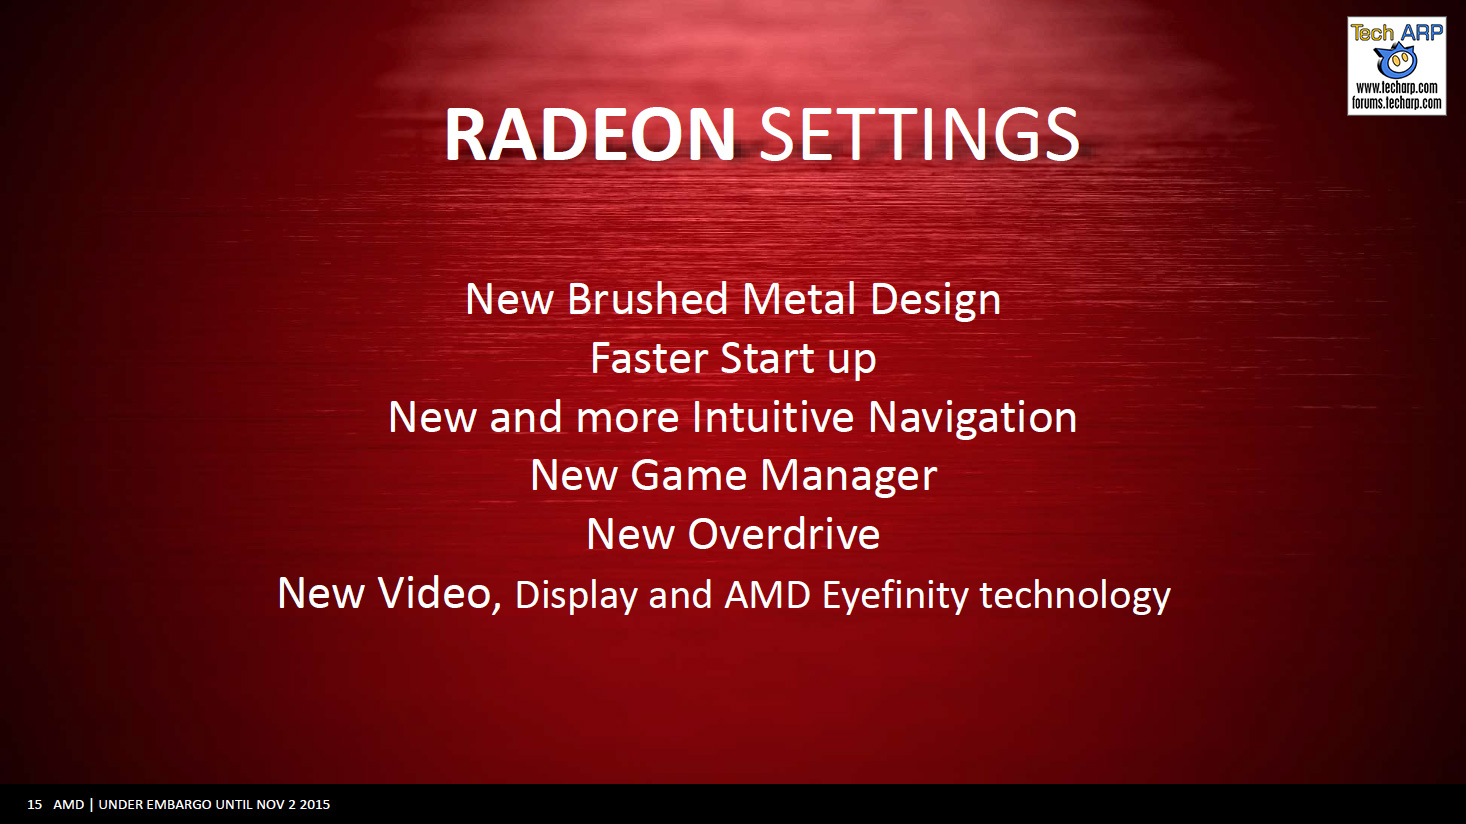 The AMD Radeon Software Crimson Editon Technology Report